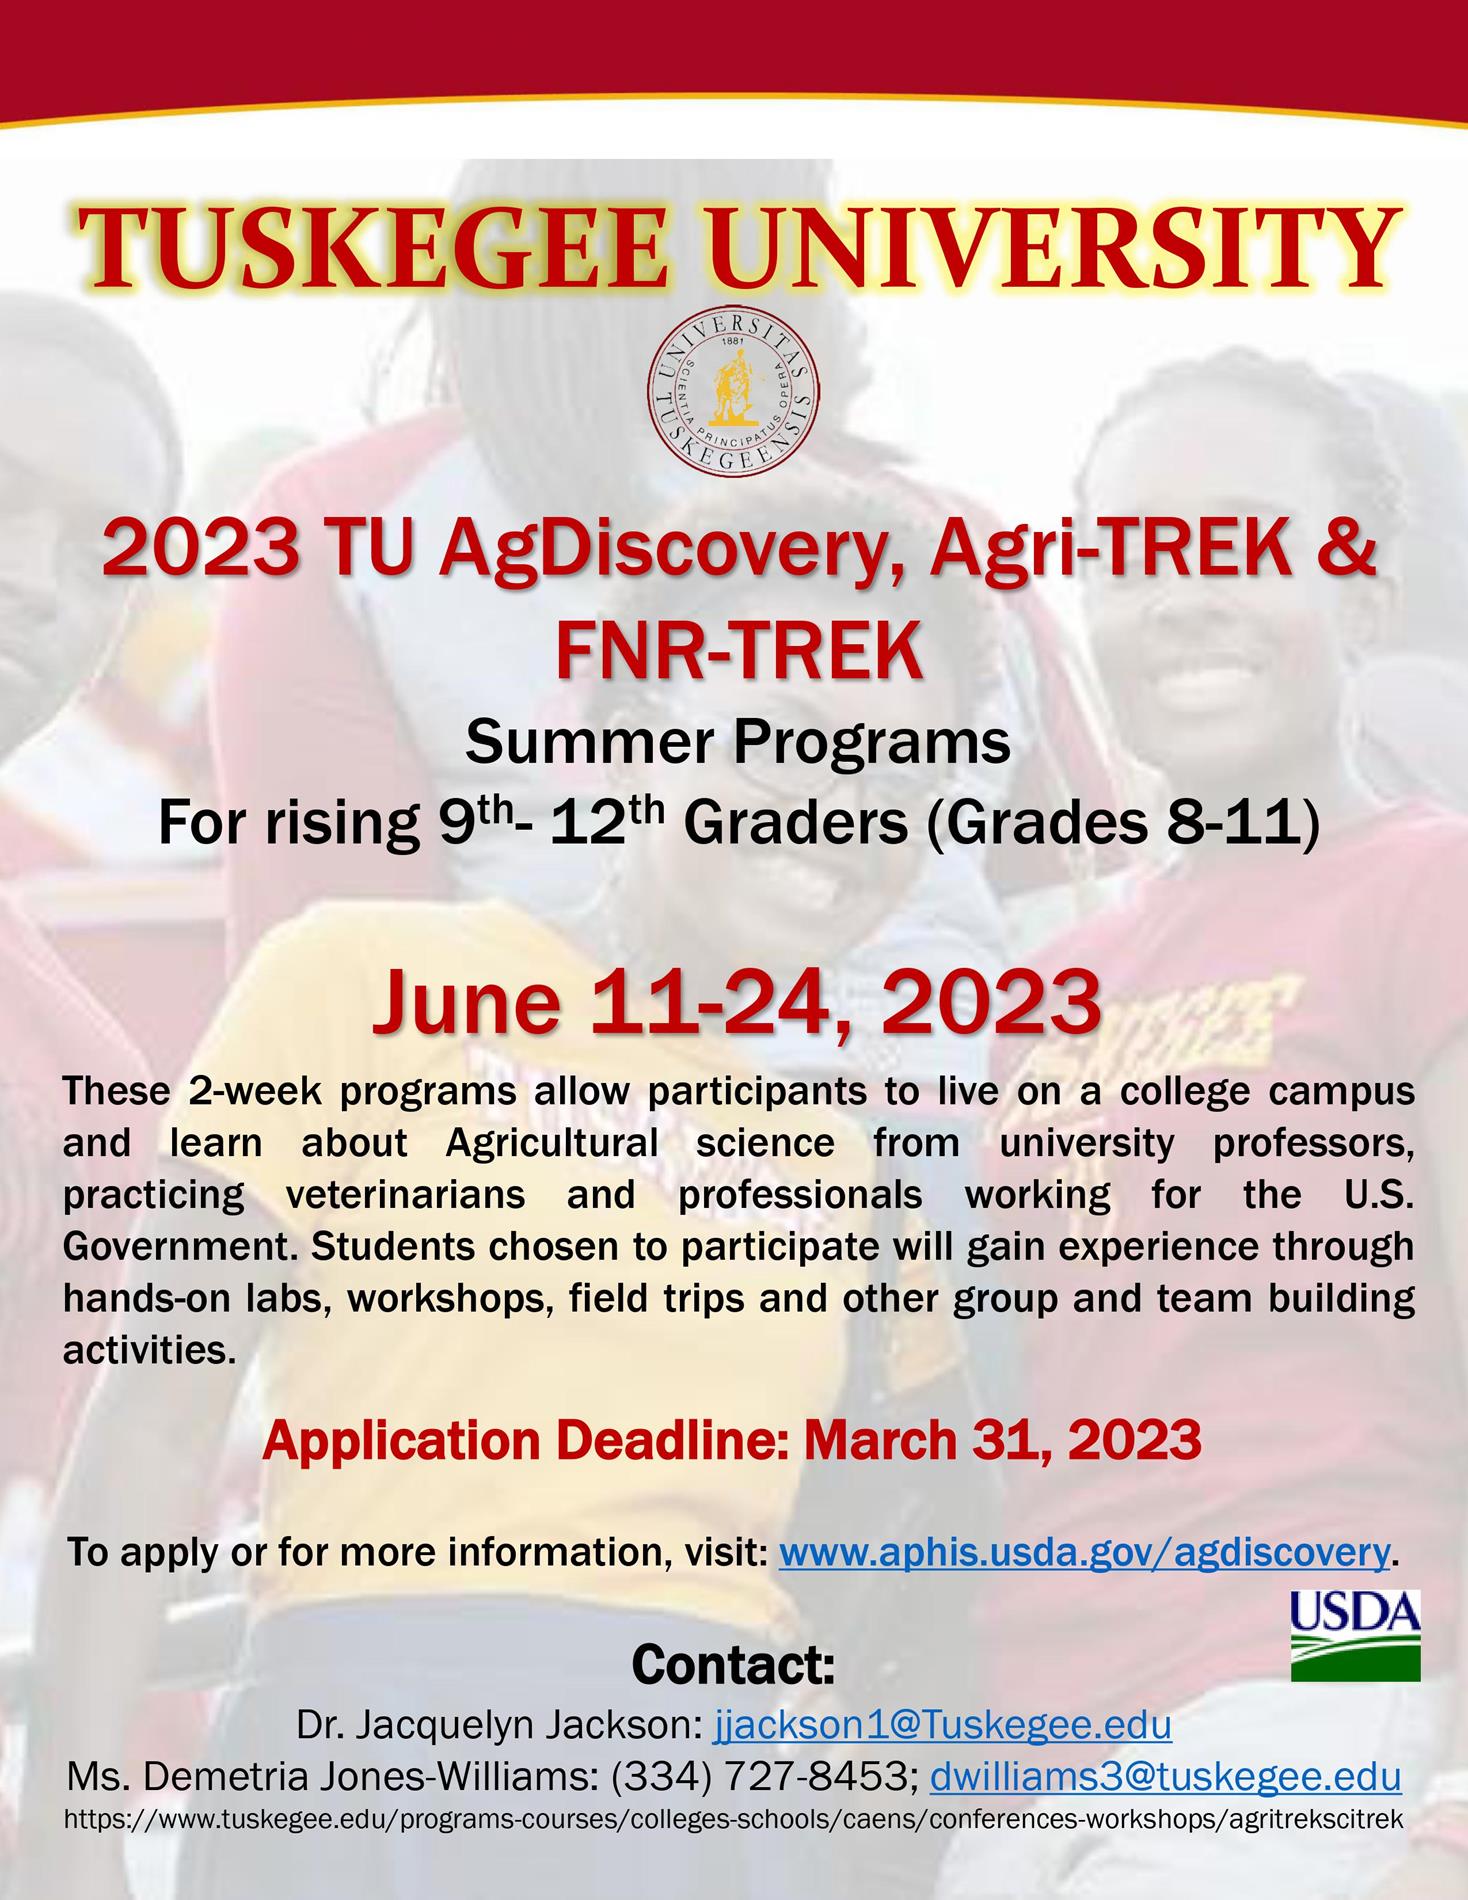 2023 Tuskegee University Programs